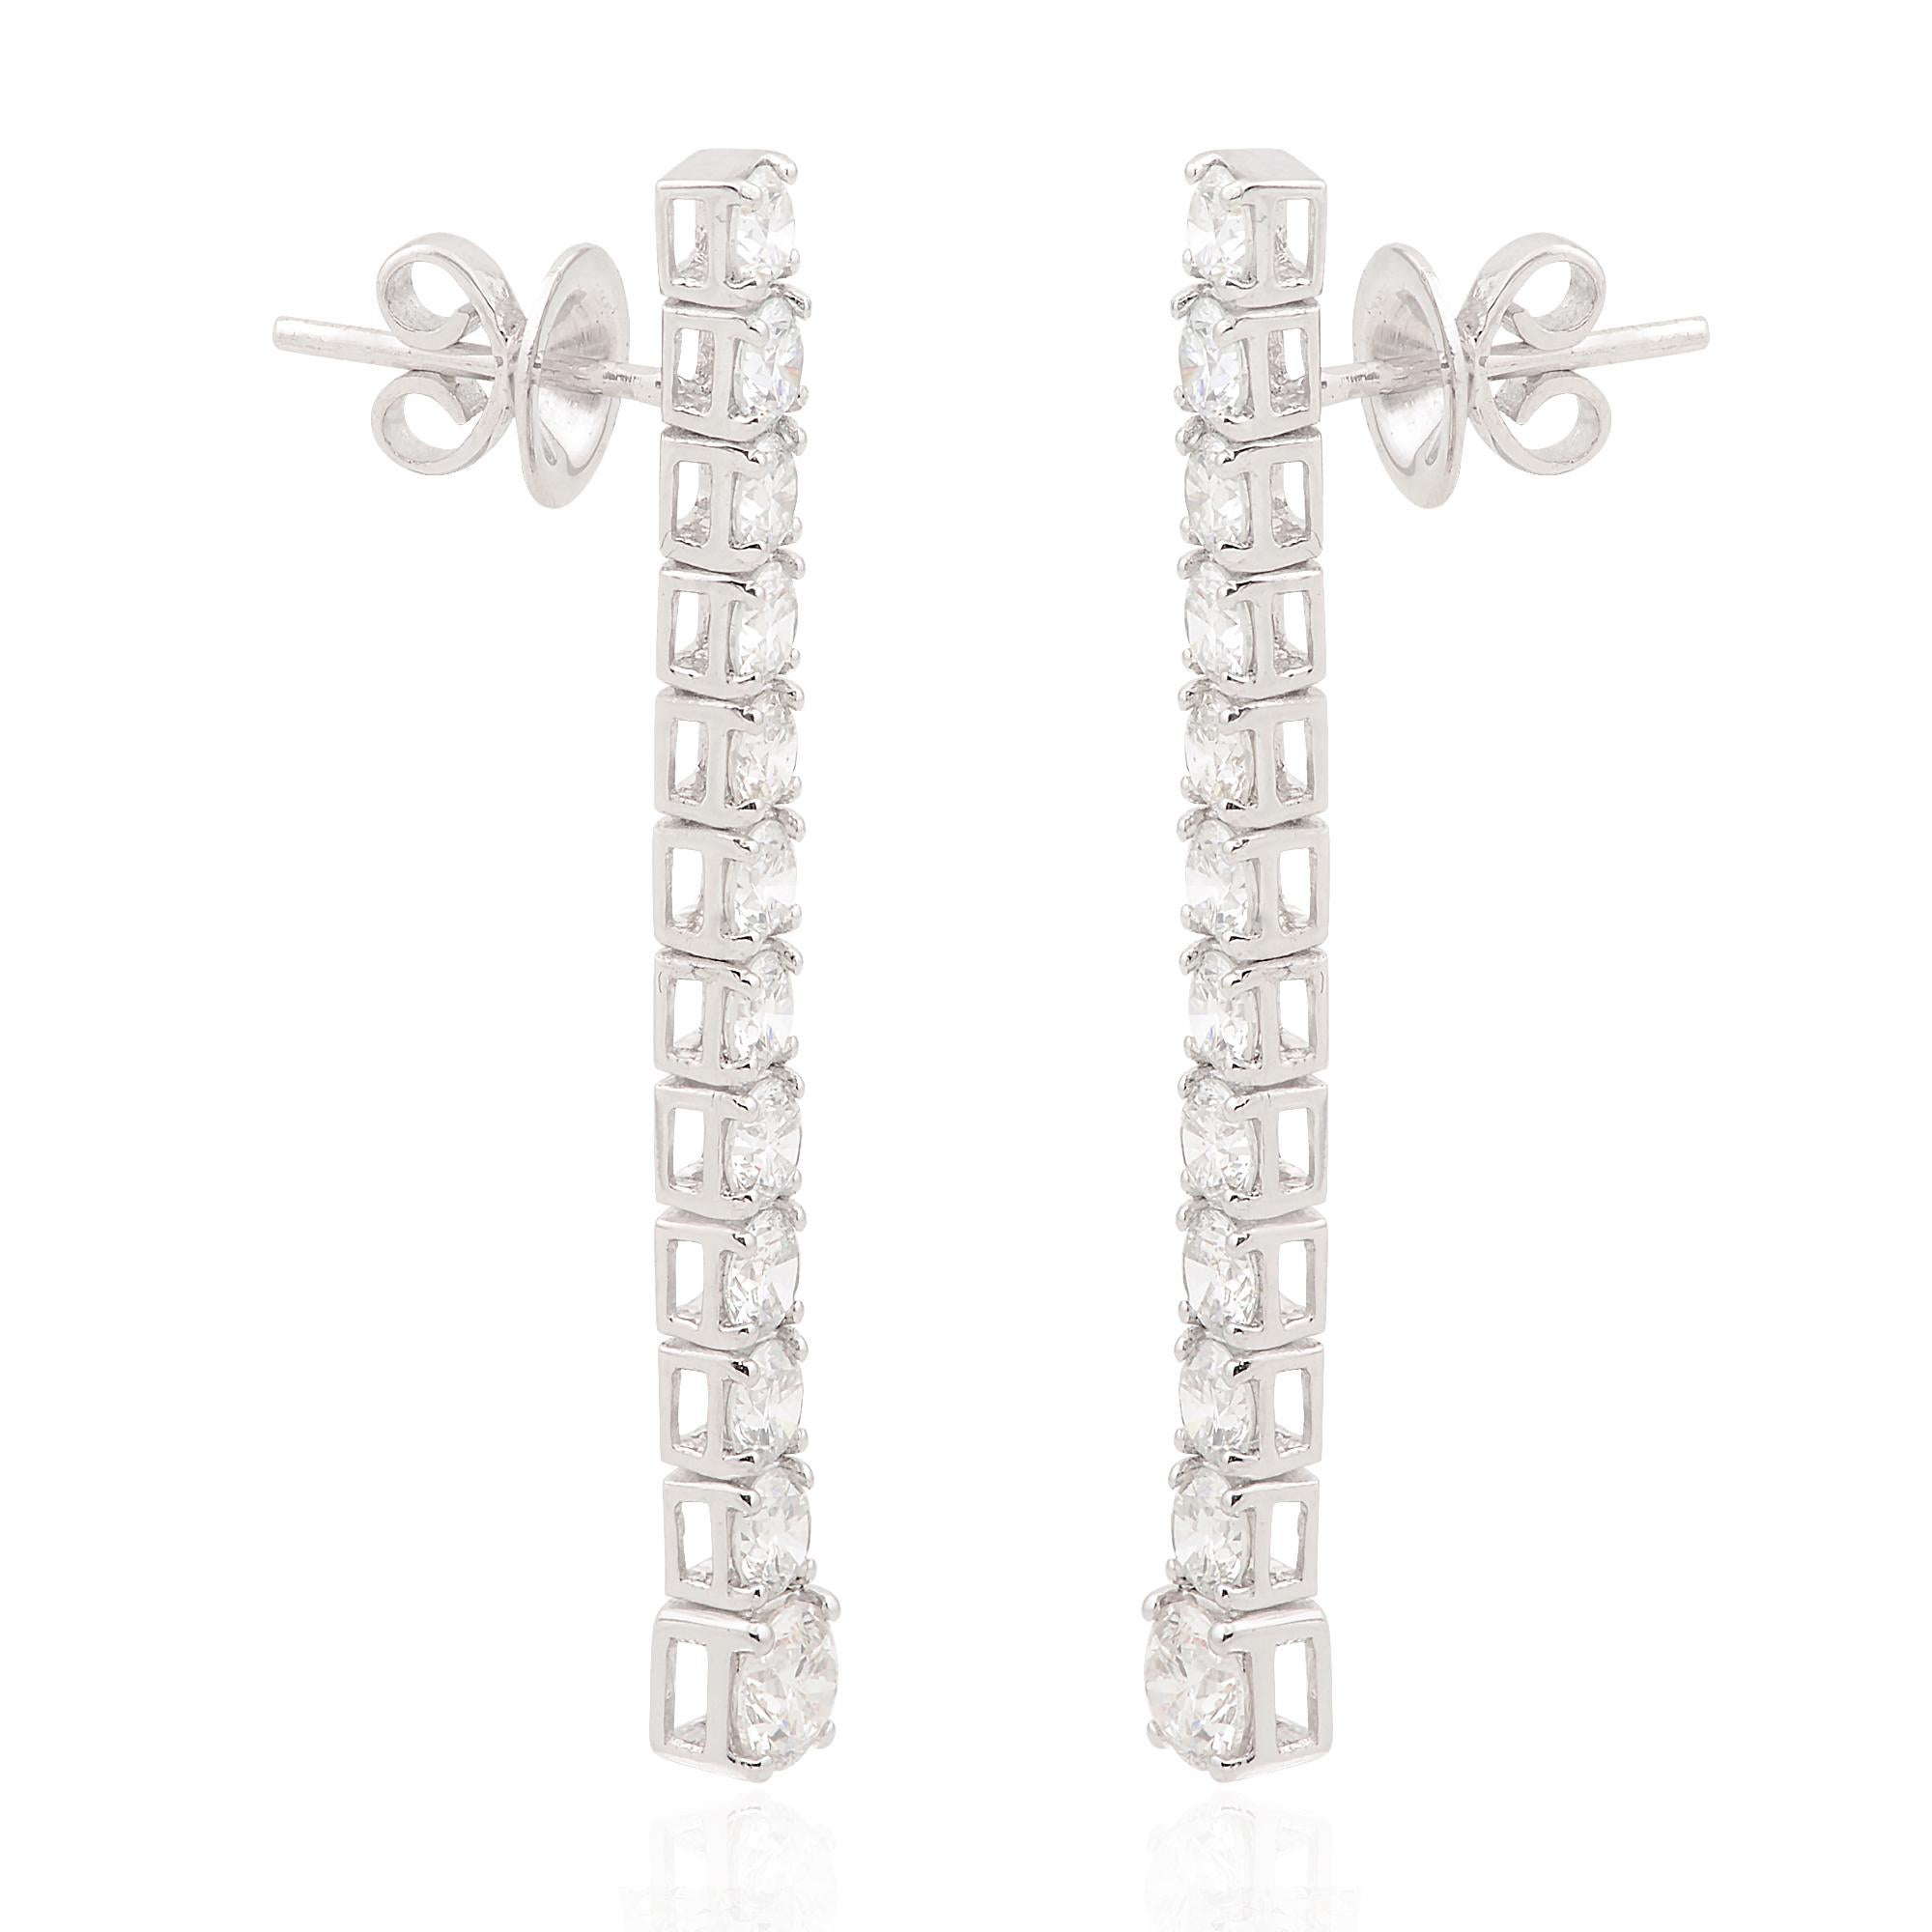 3.30 Carat Diamond Bar Dangle Earrings Solid 14k White Gold Handmade Jewelry New Pour femmes en vente